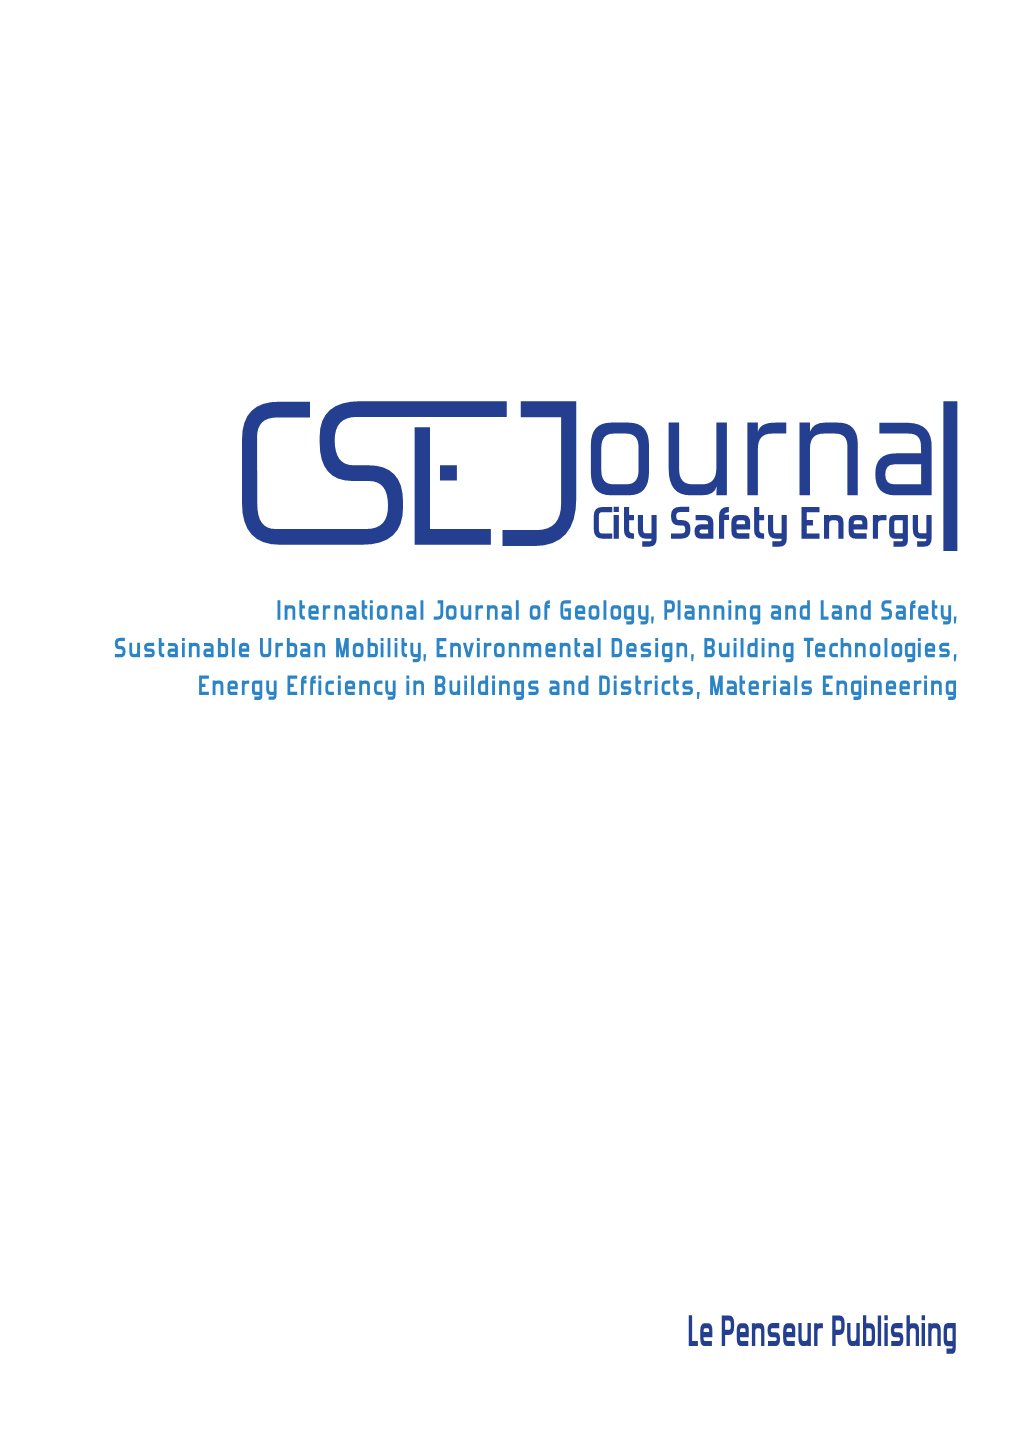 City Safety Energy